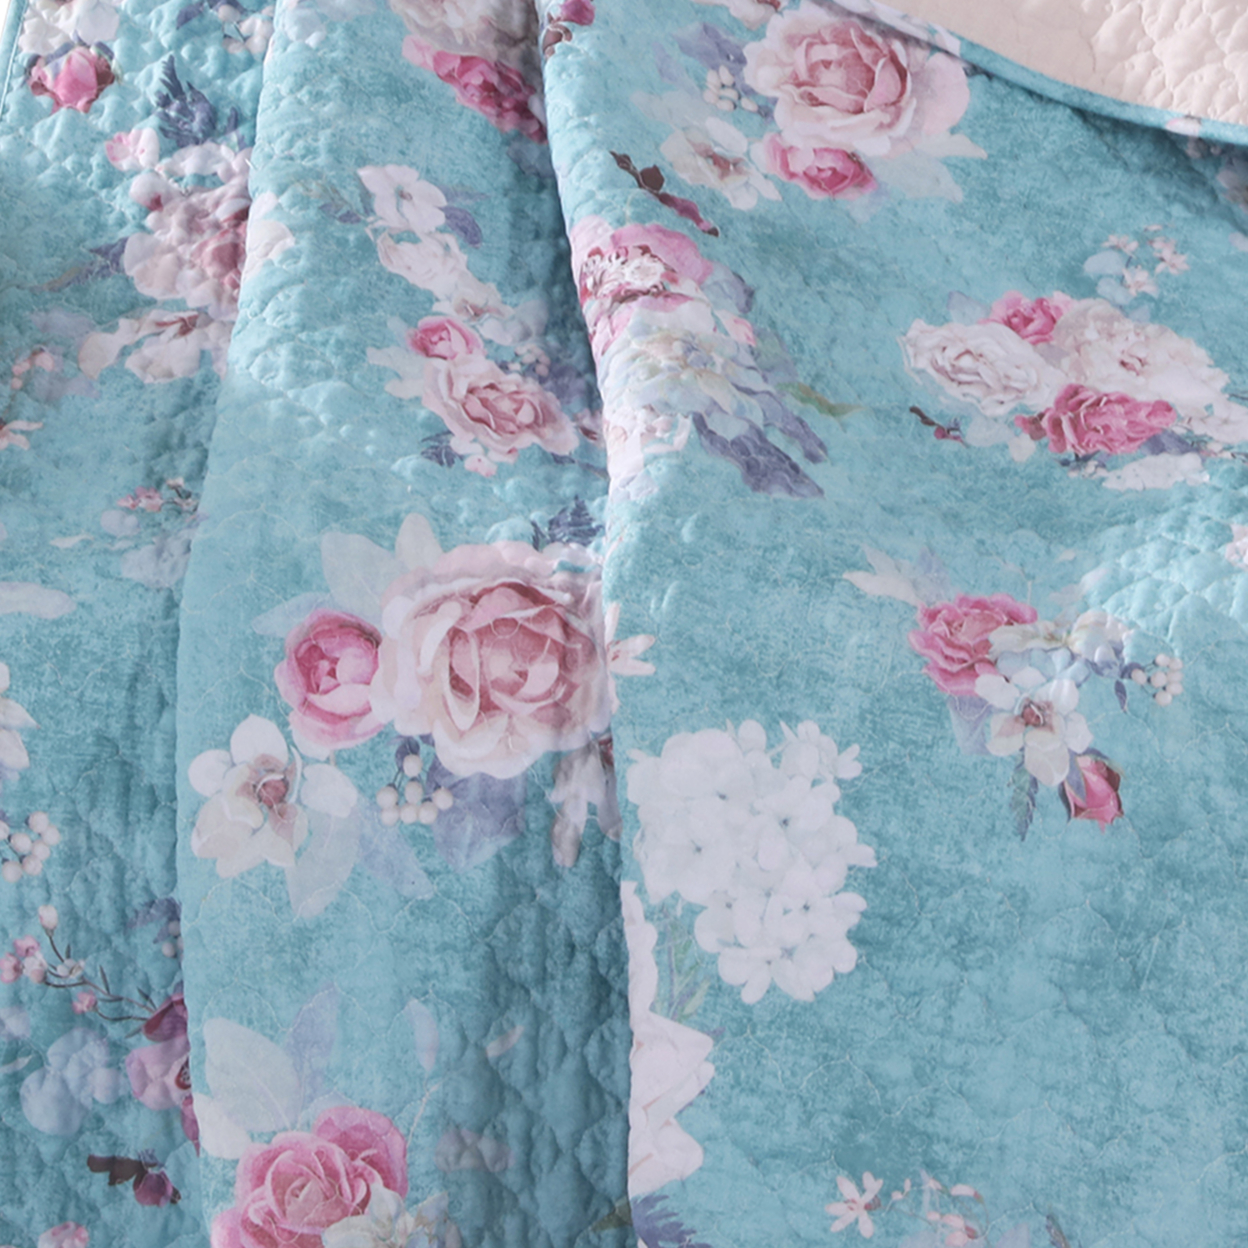 50 X 60 Inch Microfiber Throw Blanket, Floral Print, Blue, Pink, White- Saltoro Sherpi